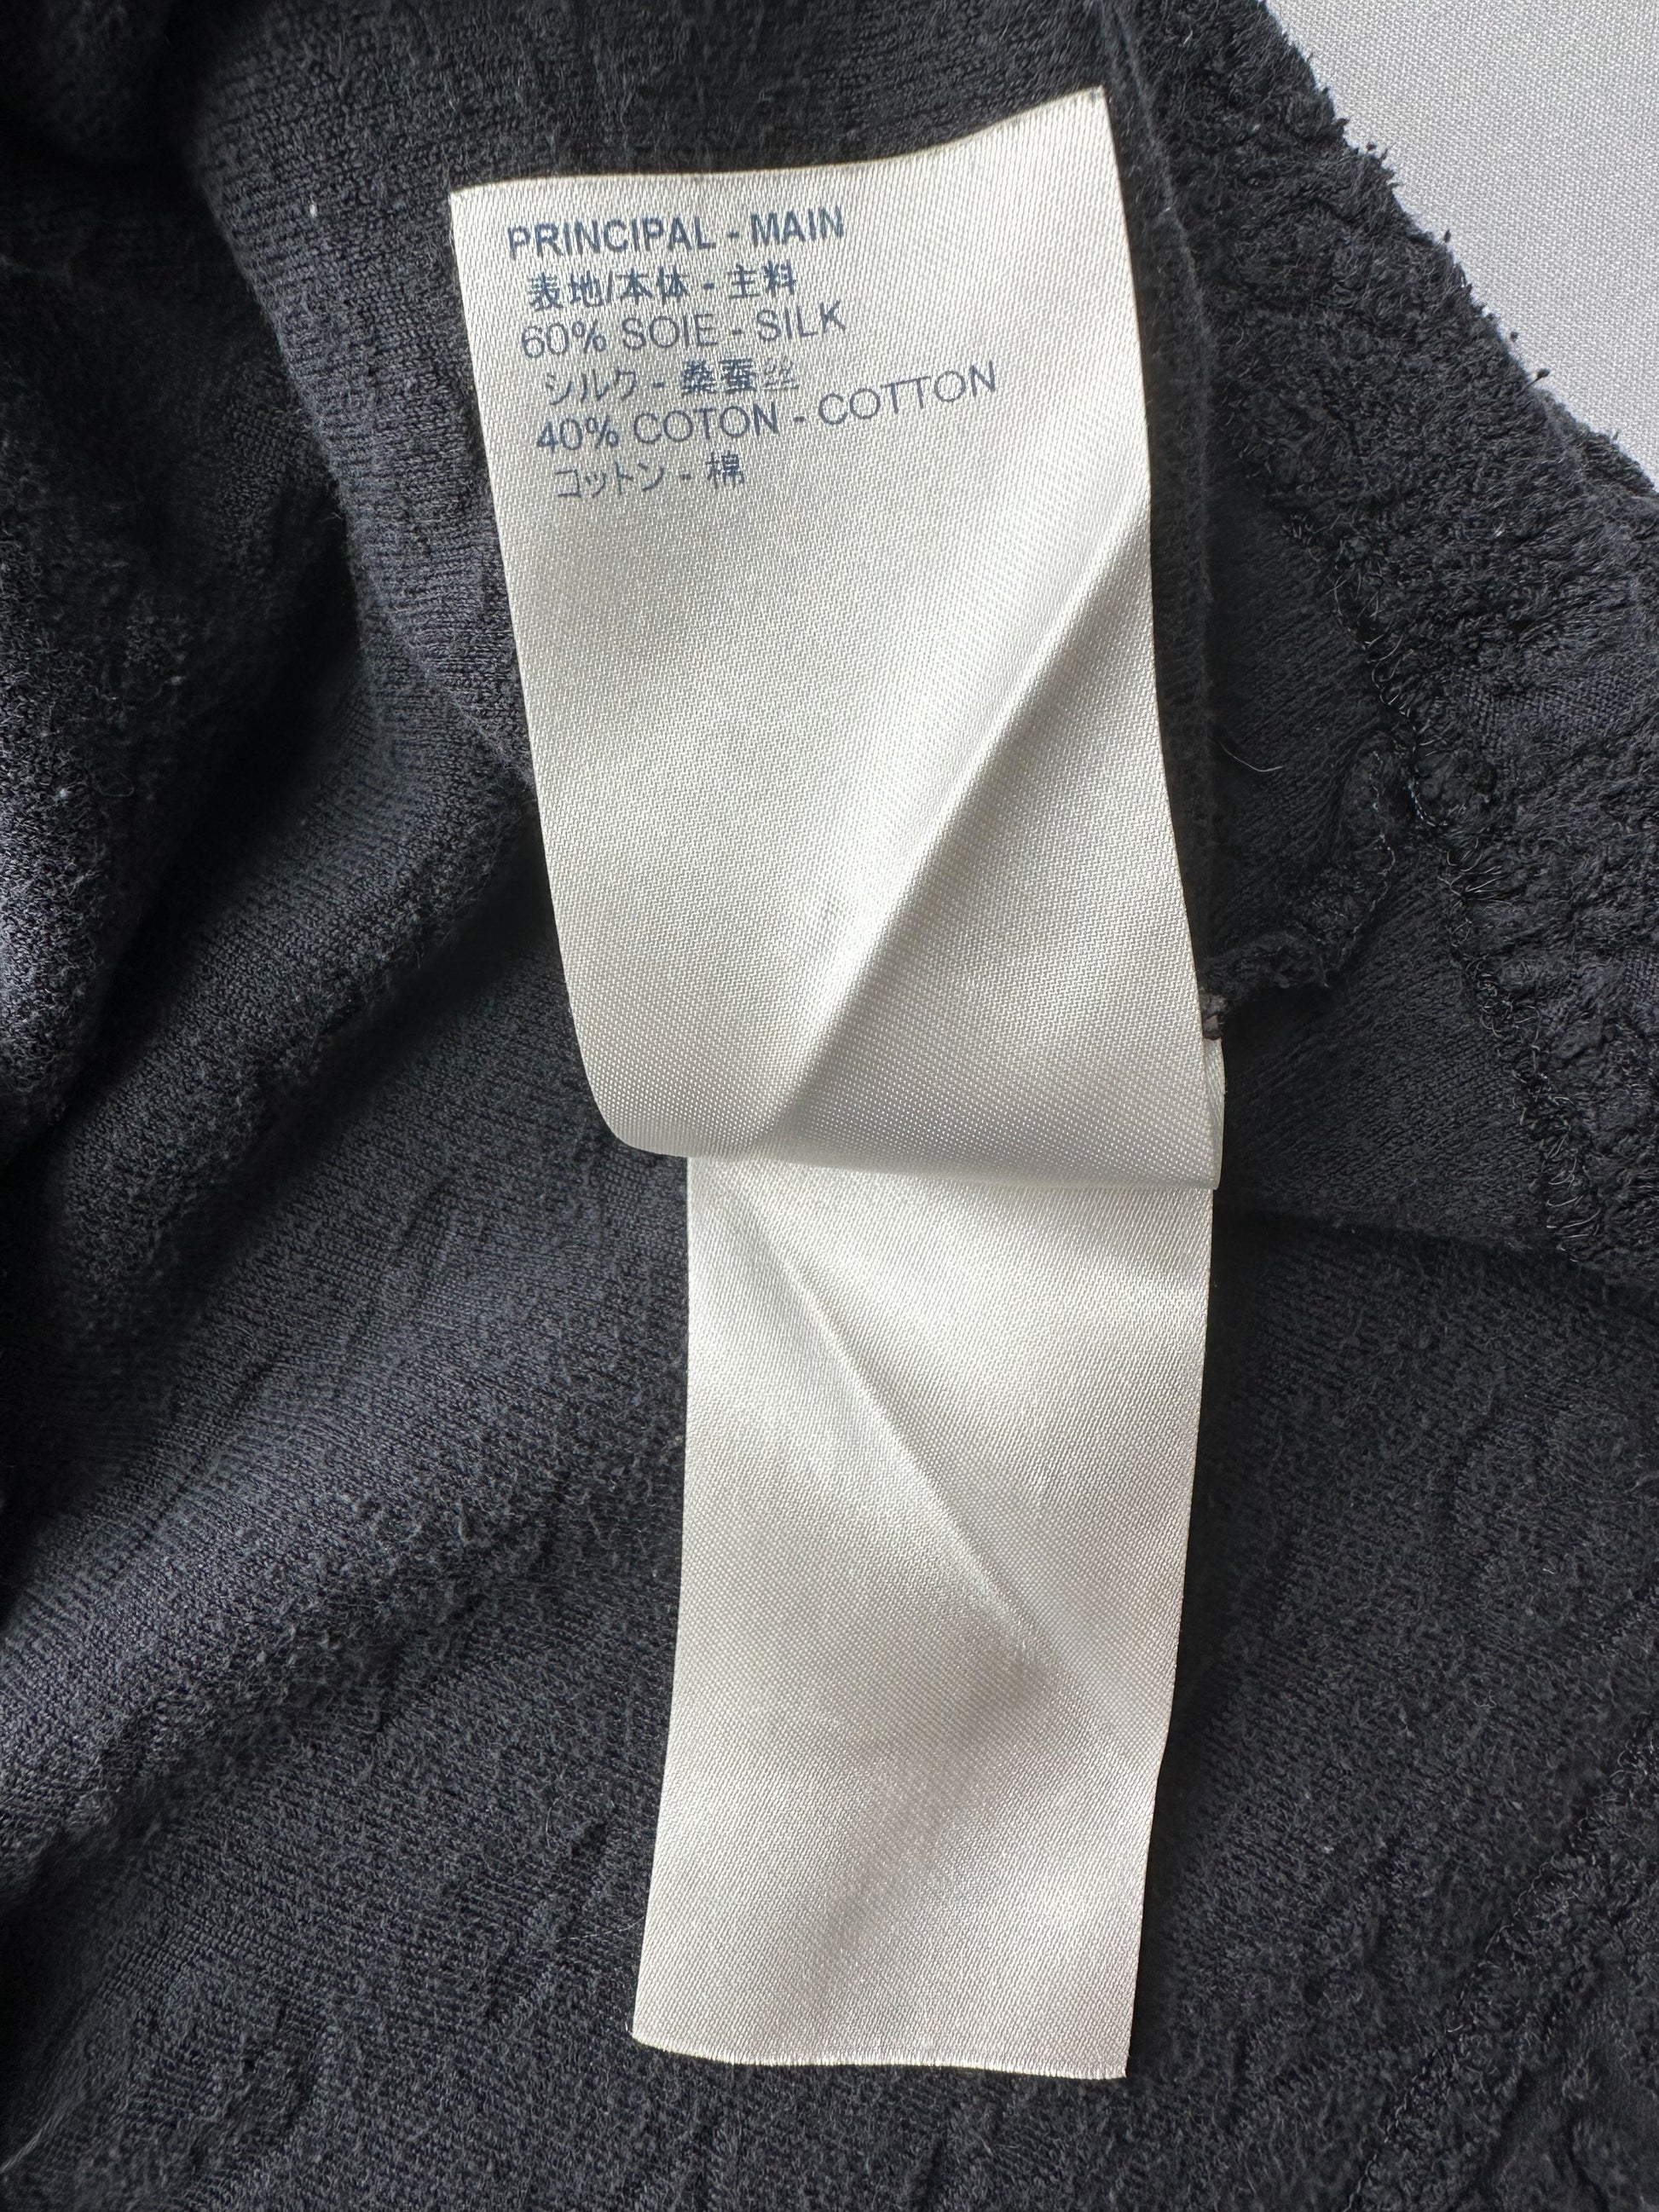 Featuring: Louis Vuitton Monogram Towel T Shirt Sz XXL (fits US XL)